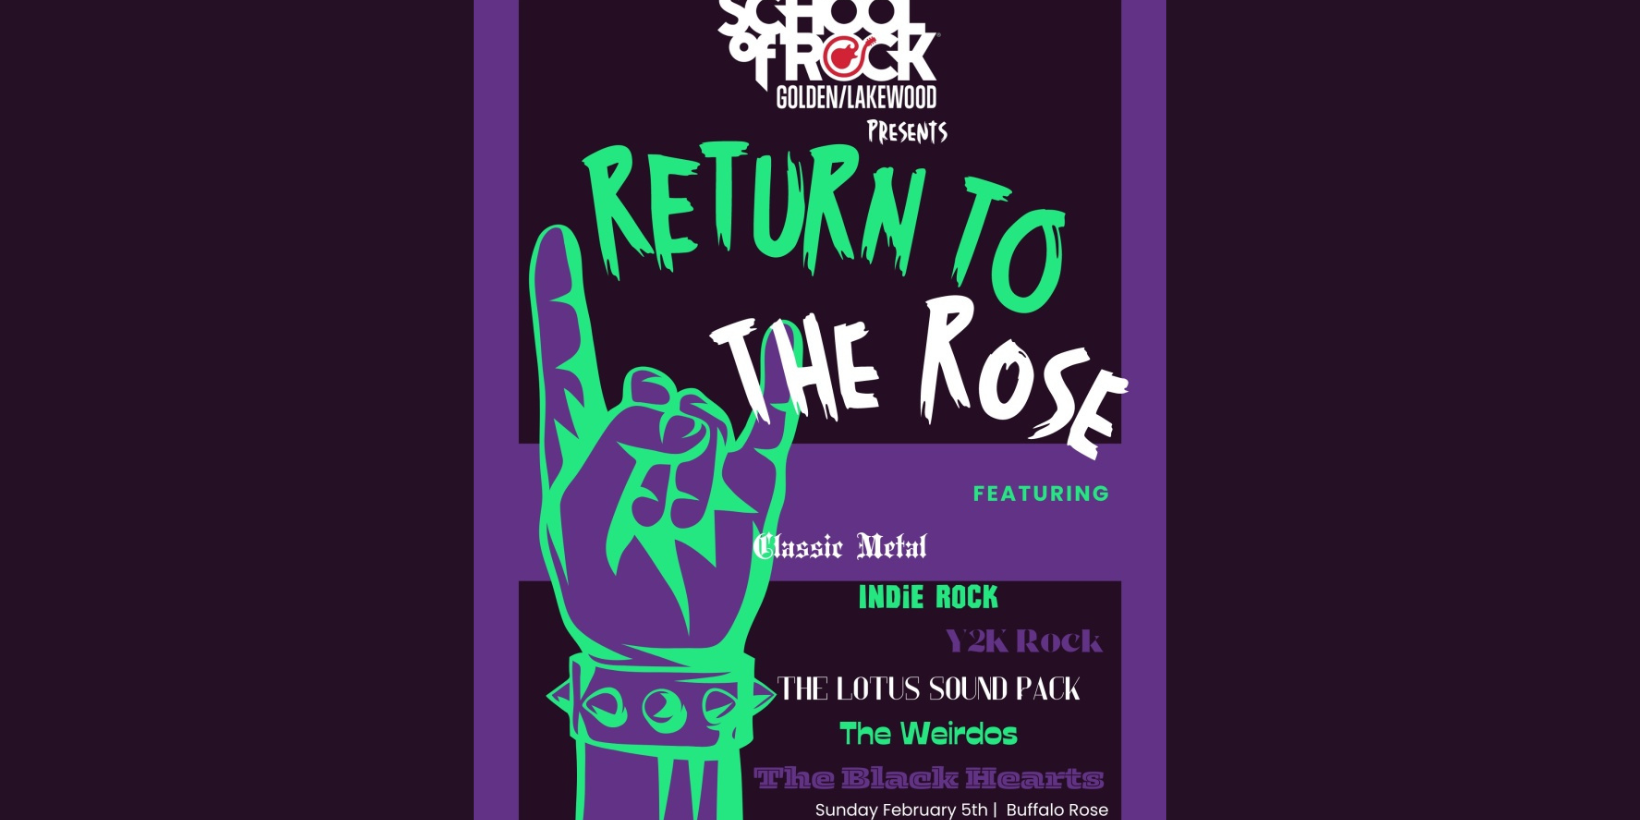 Live @ The Rose - School of Rock - Golden/Lakewood promotional image